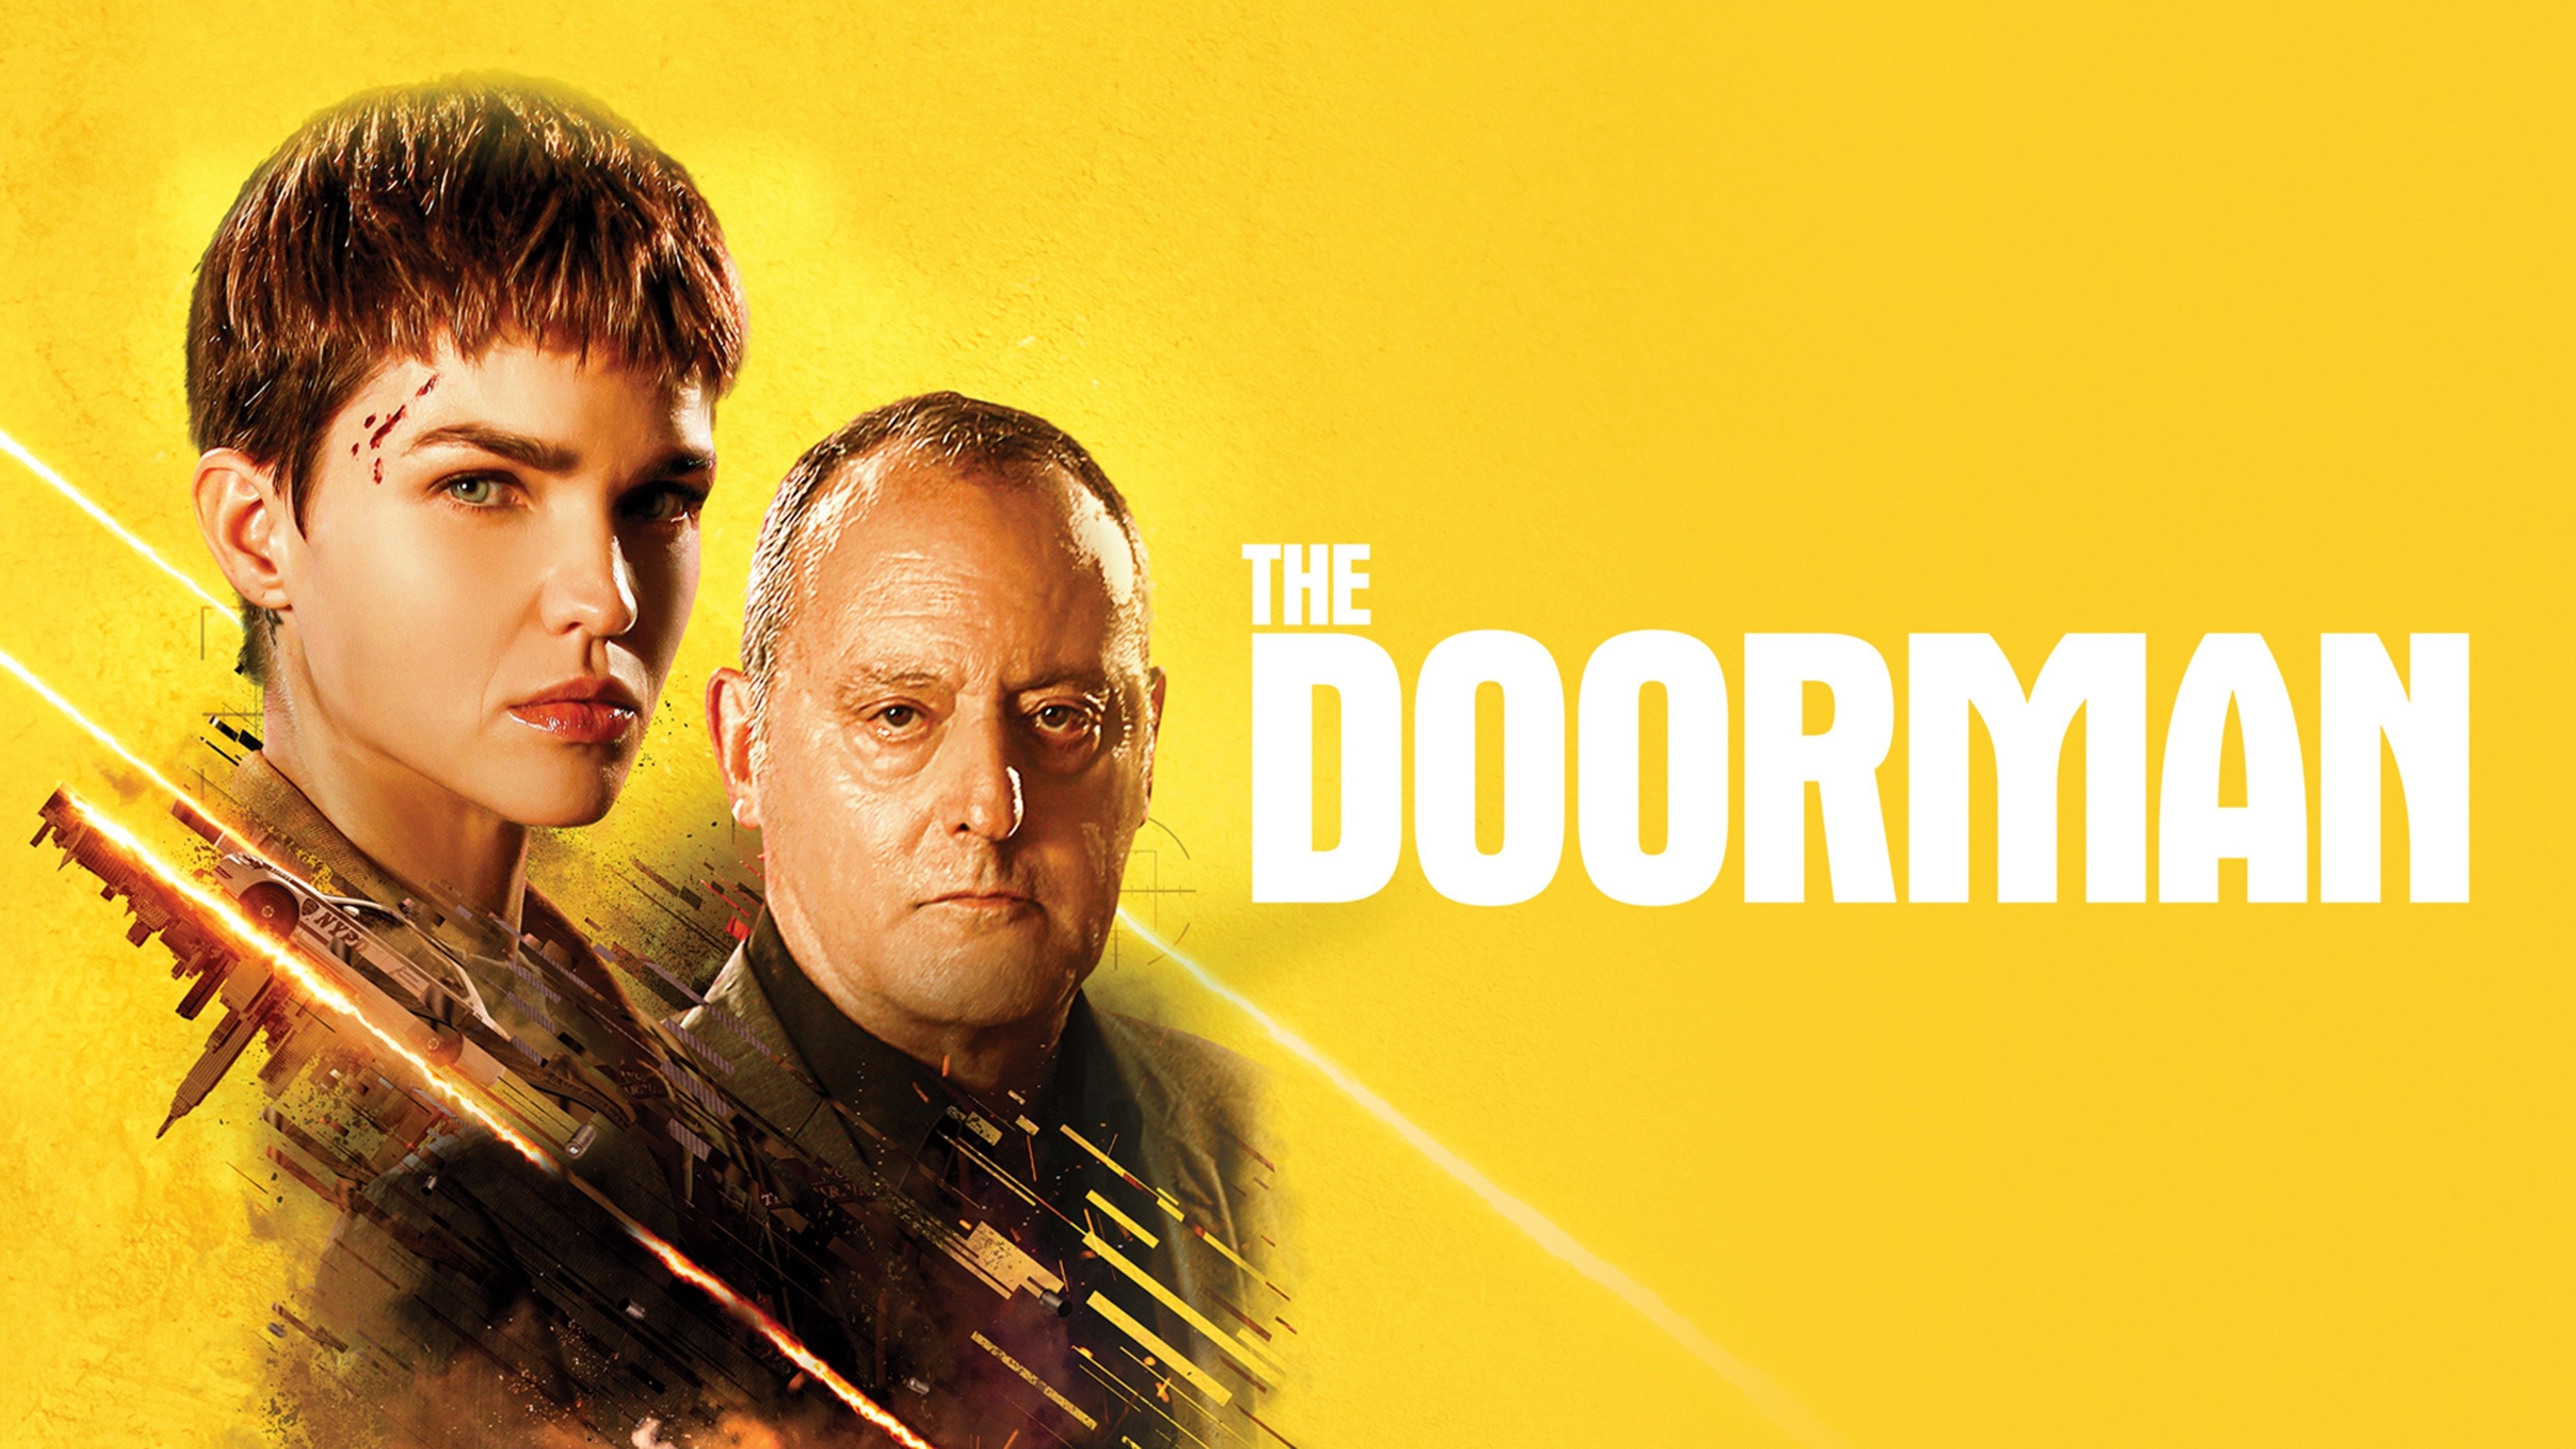 The Doorman (2020 film) - Wikipedia